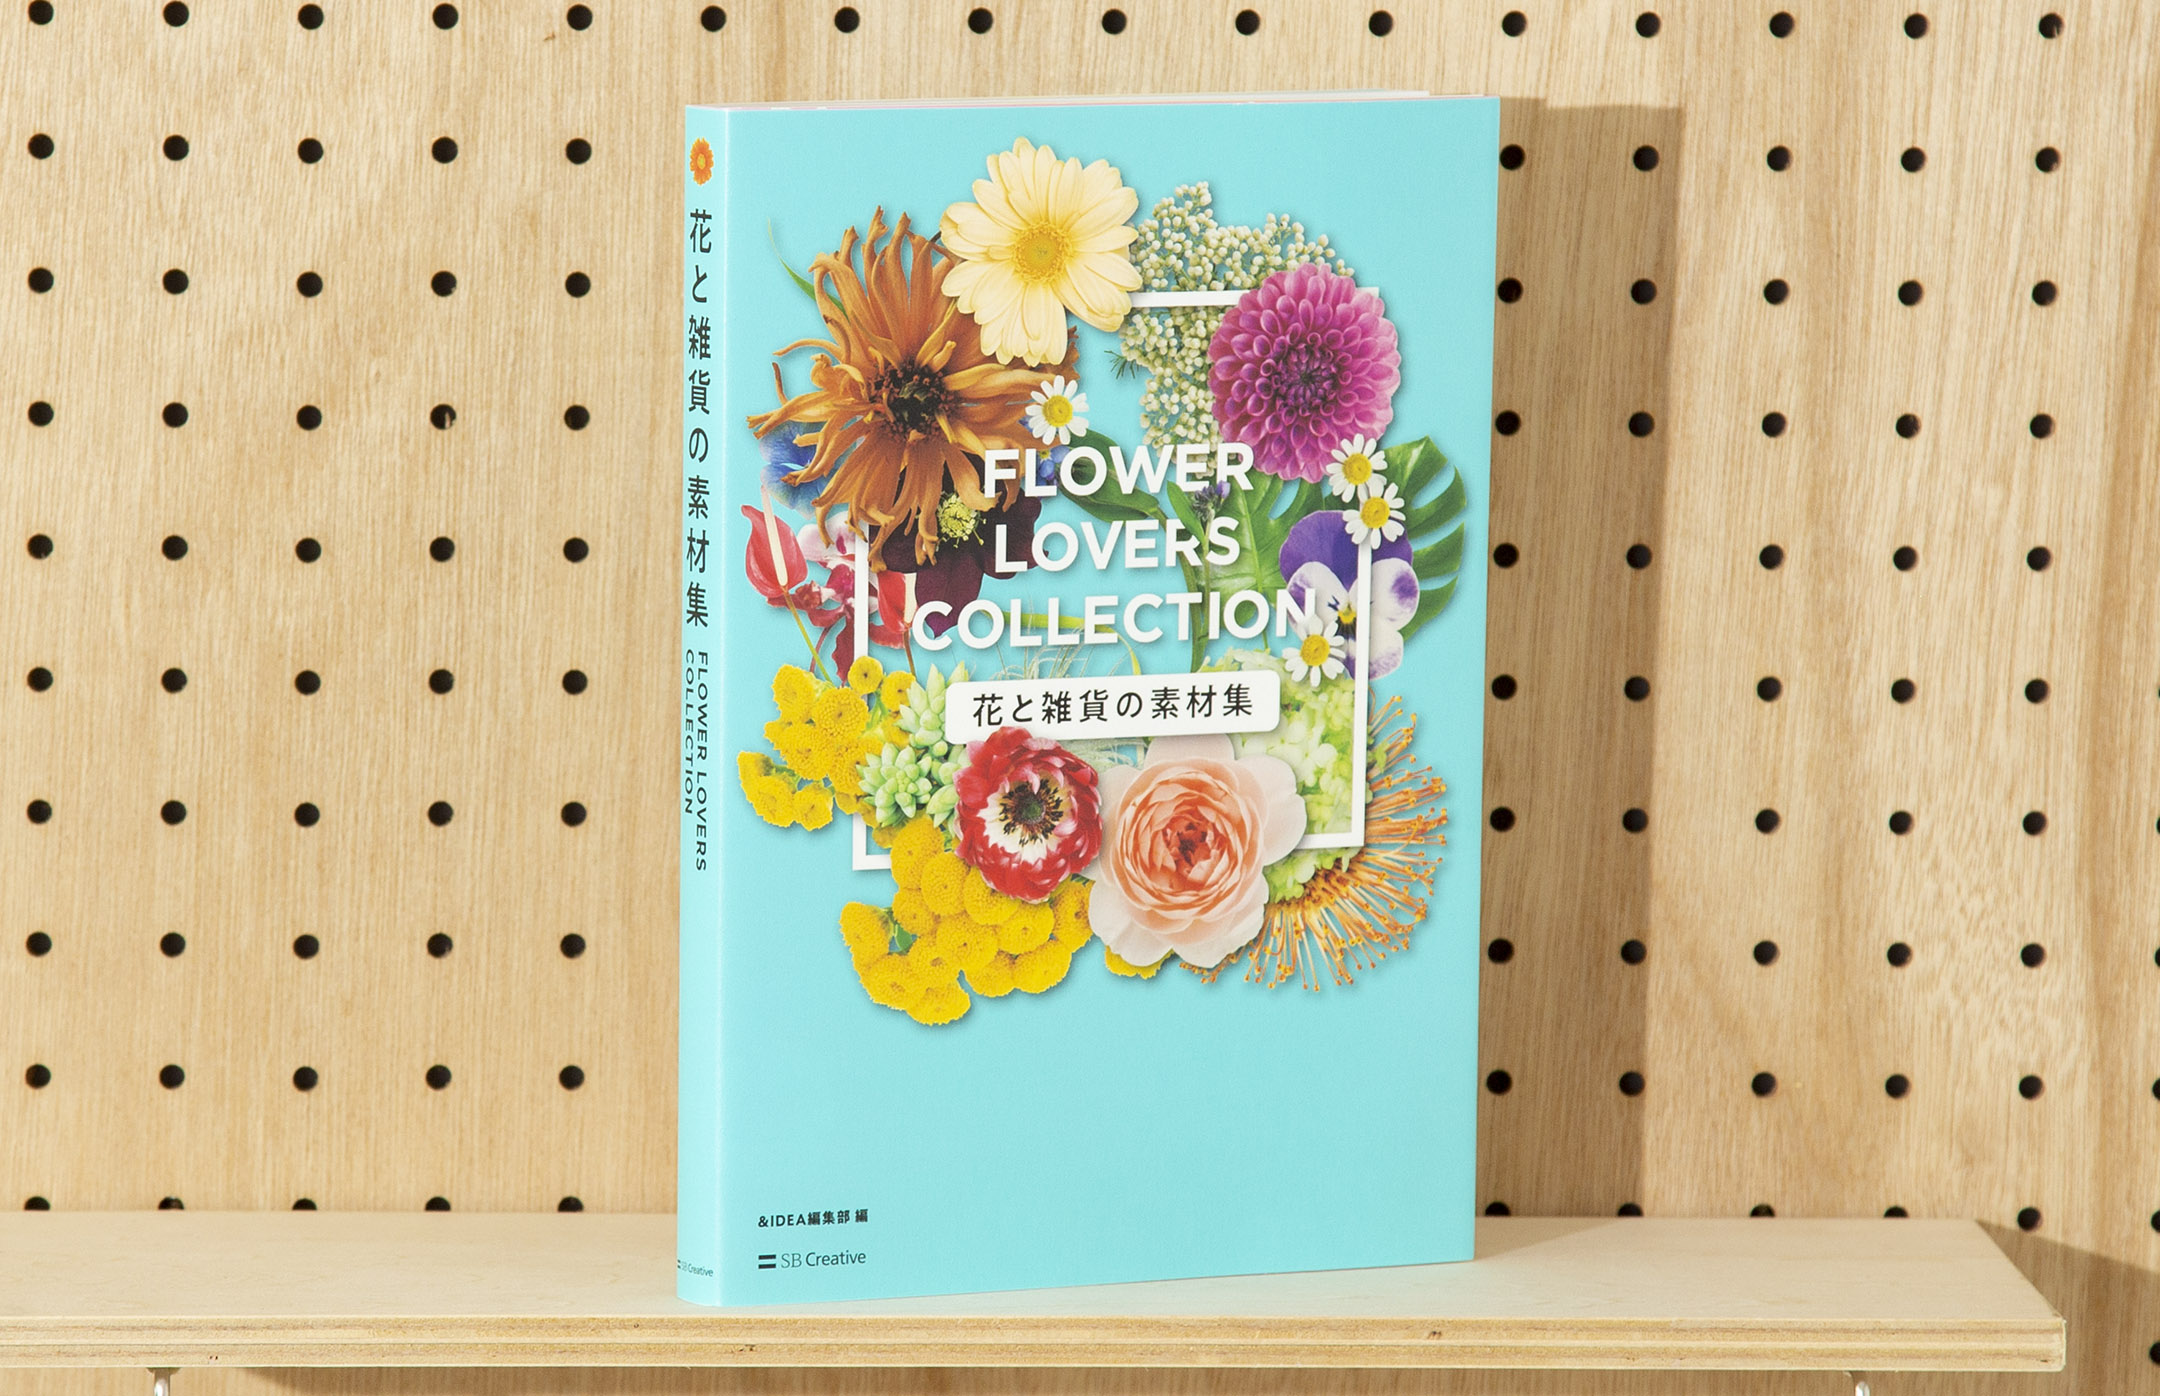 FLOWER LOVERS COLLECTION 花と雑貨の素材集